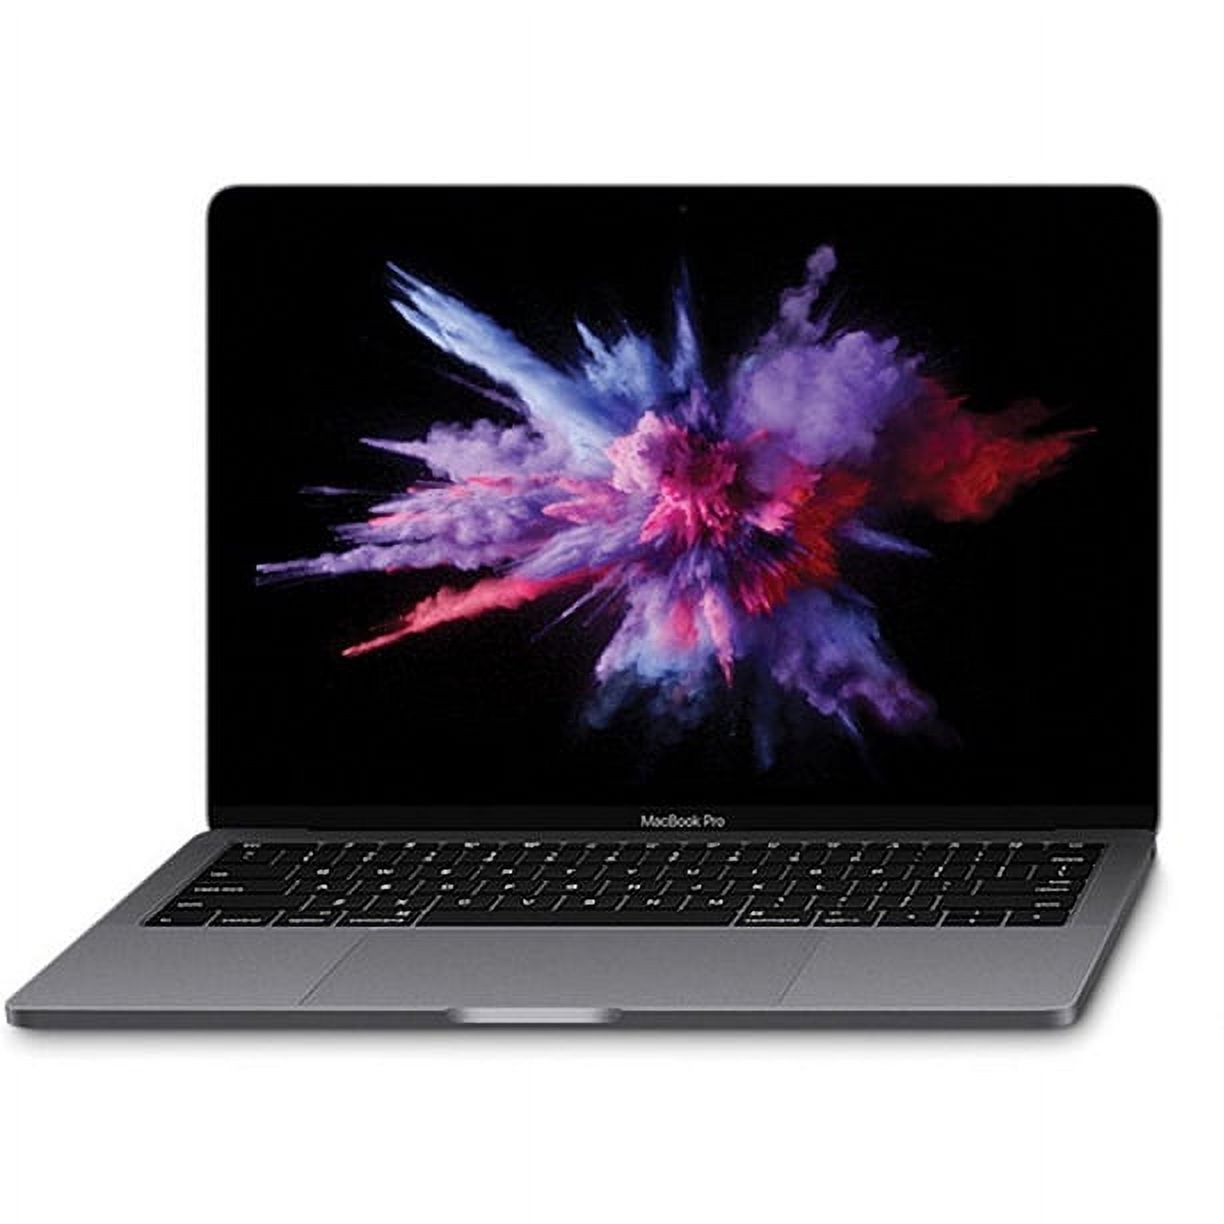 Apple MacBook Pro Laptop, 13.3\" Retina Display, Intel Core i5, 256GB SSD, Mac OS Sierra, MPXT2B/A. Pre-Owned: Like New - image 2 of 5